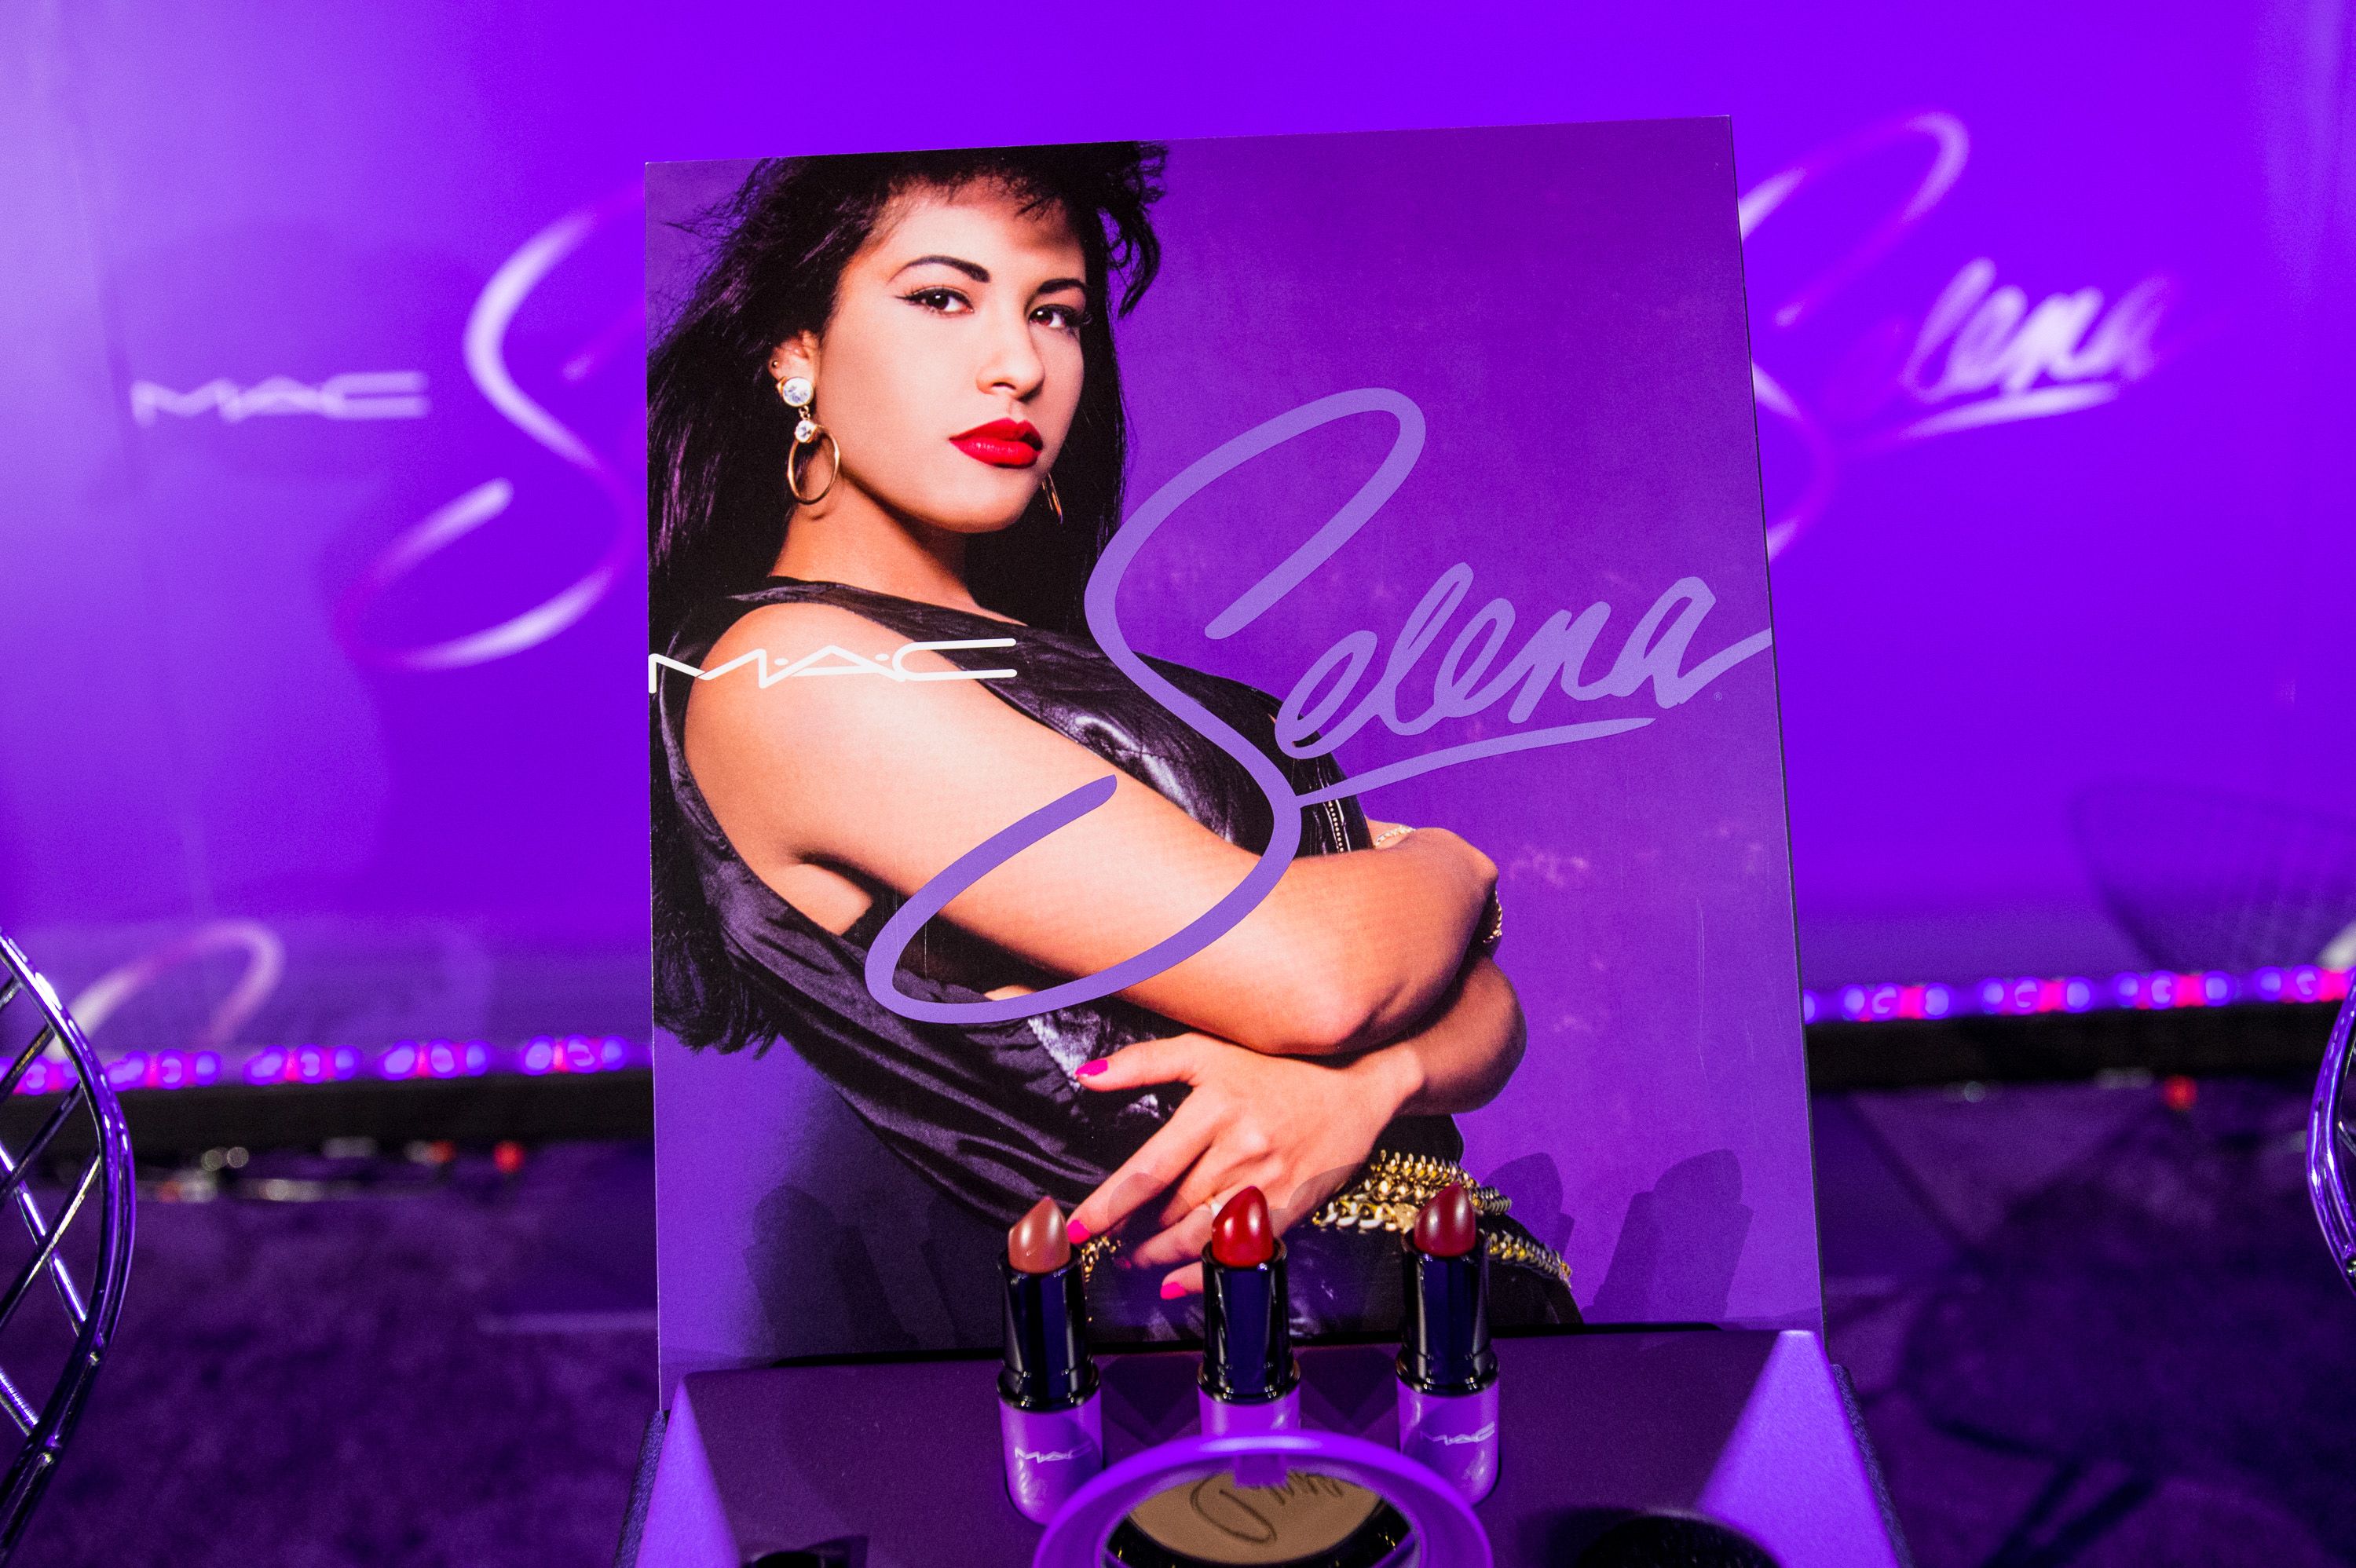 Mac S Selena La Reina Collection To